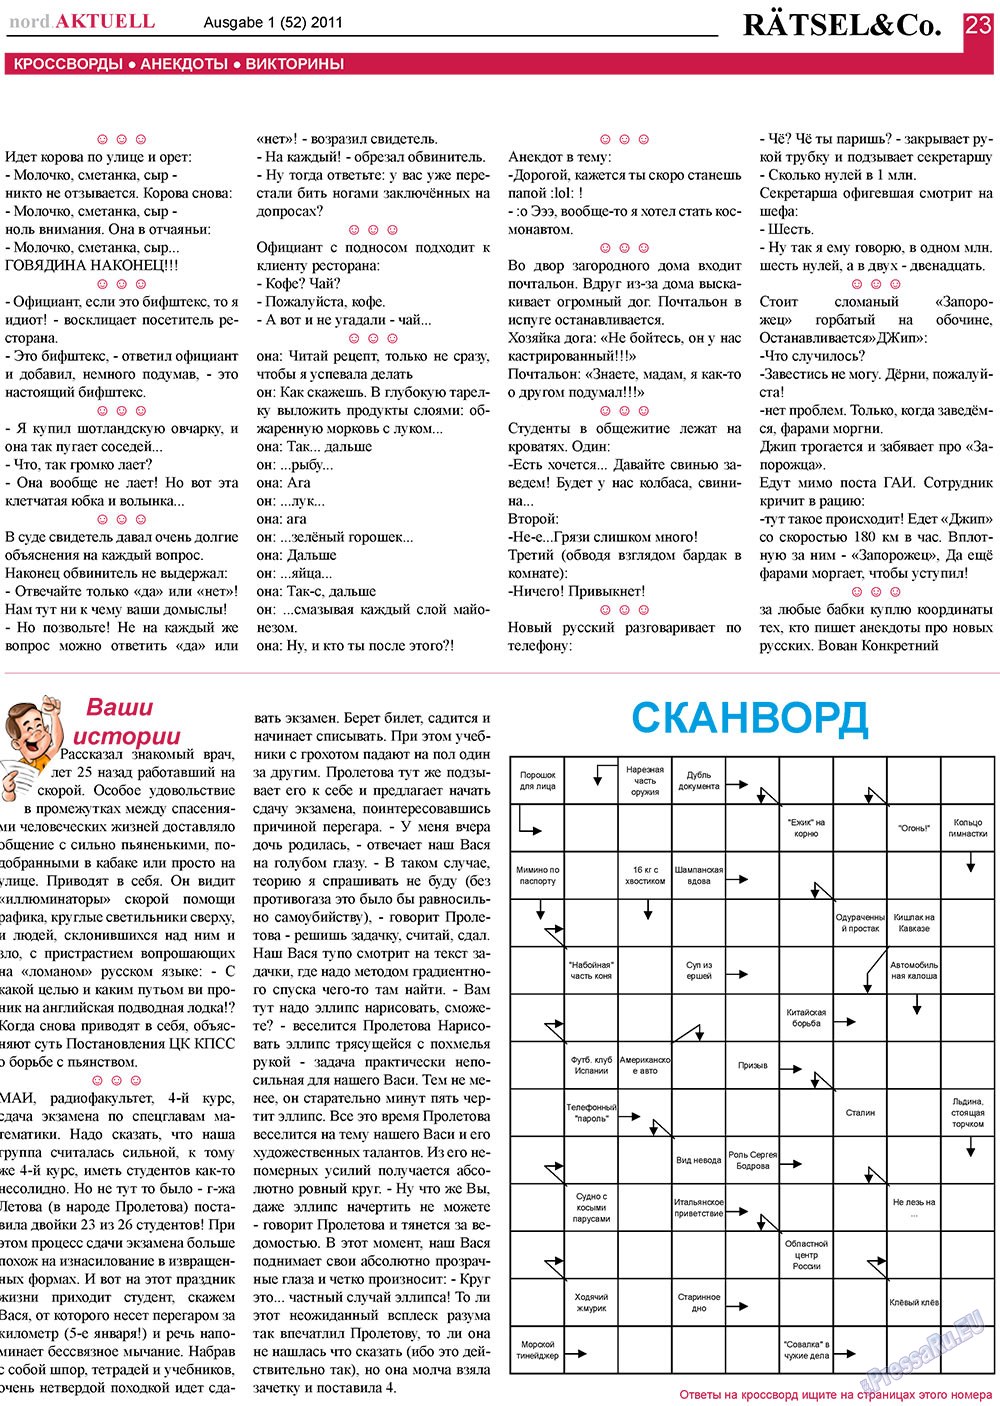 nord.Aktuell, газета. 2011 №1 стр.23